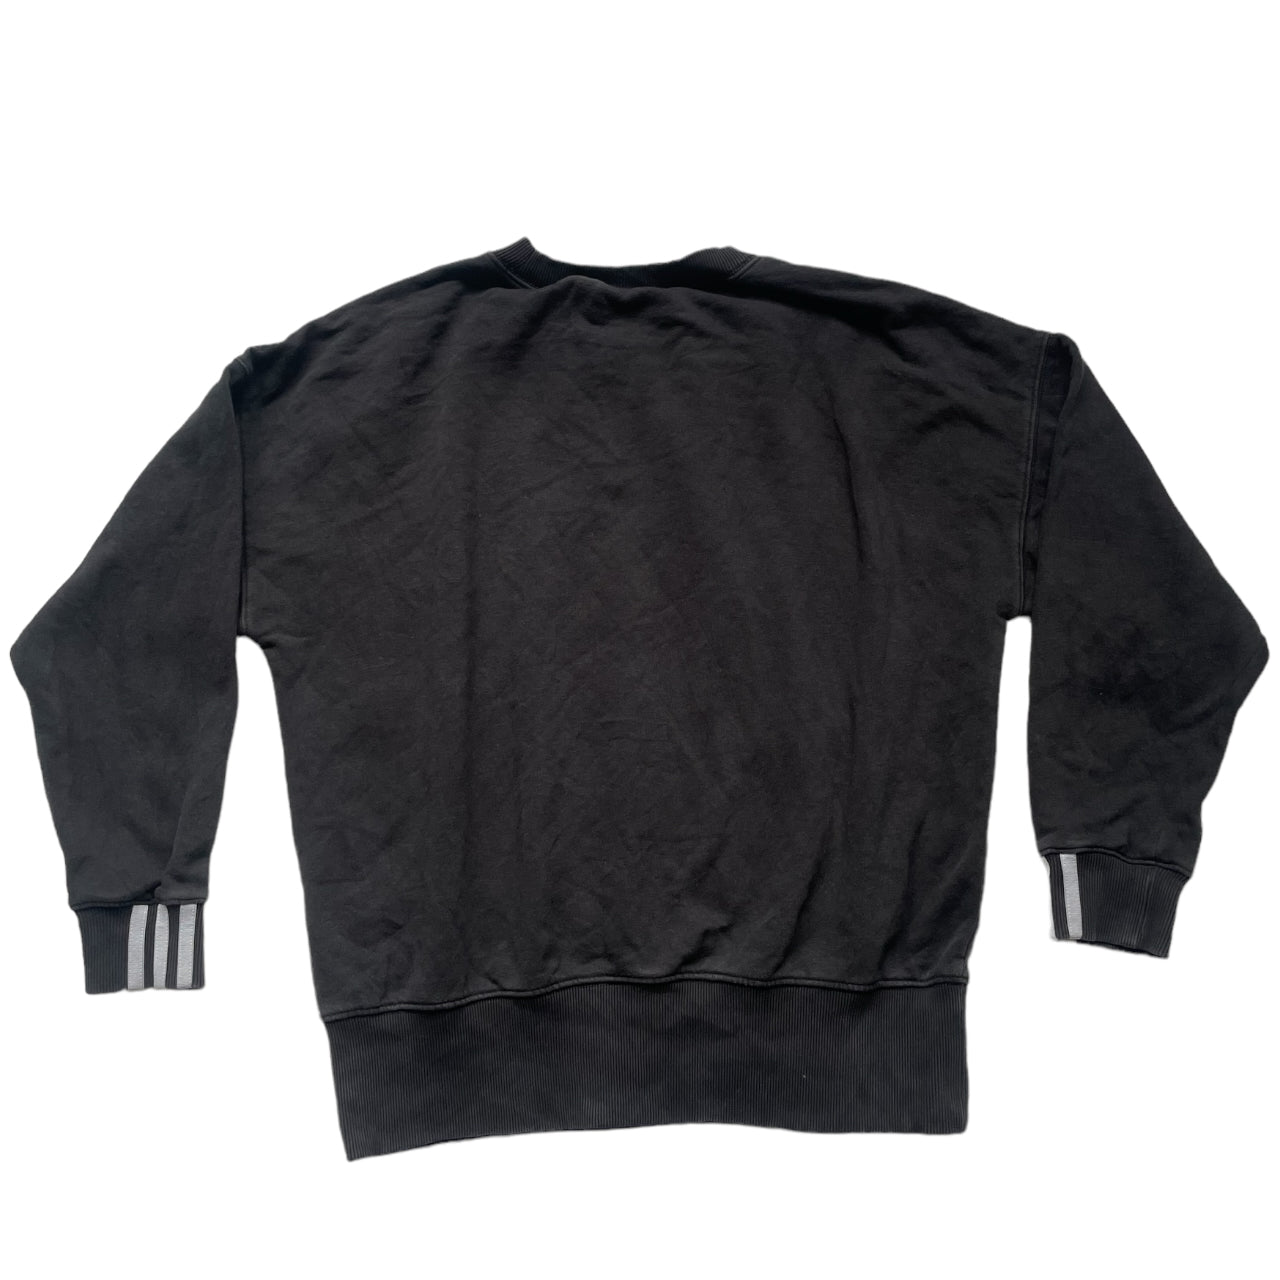 Adidas Vintage Sweatshirt 3 Stripes 80s Retro XL Size Black A_31